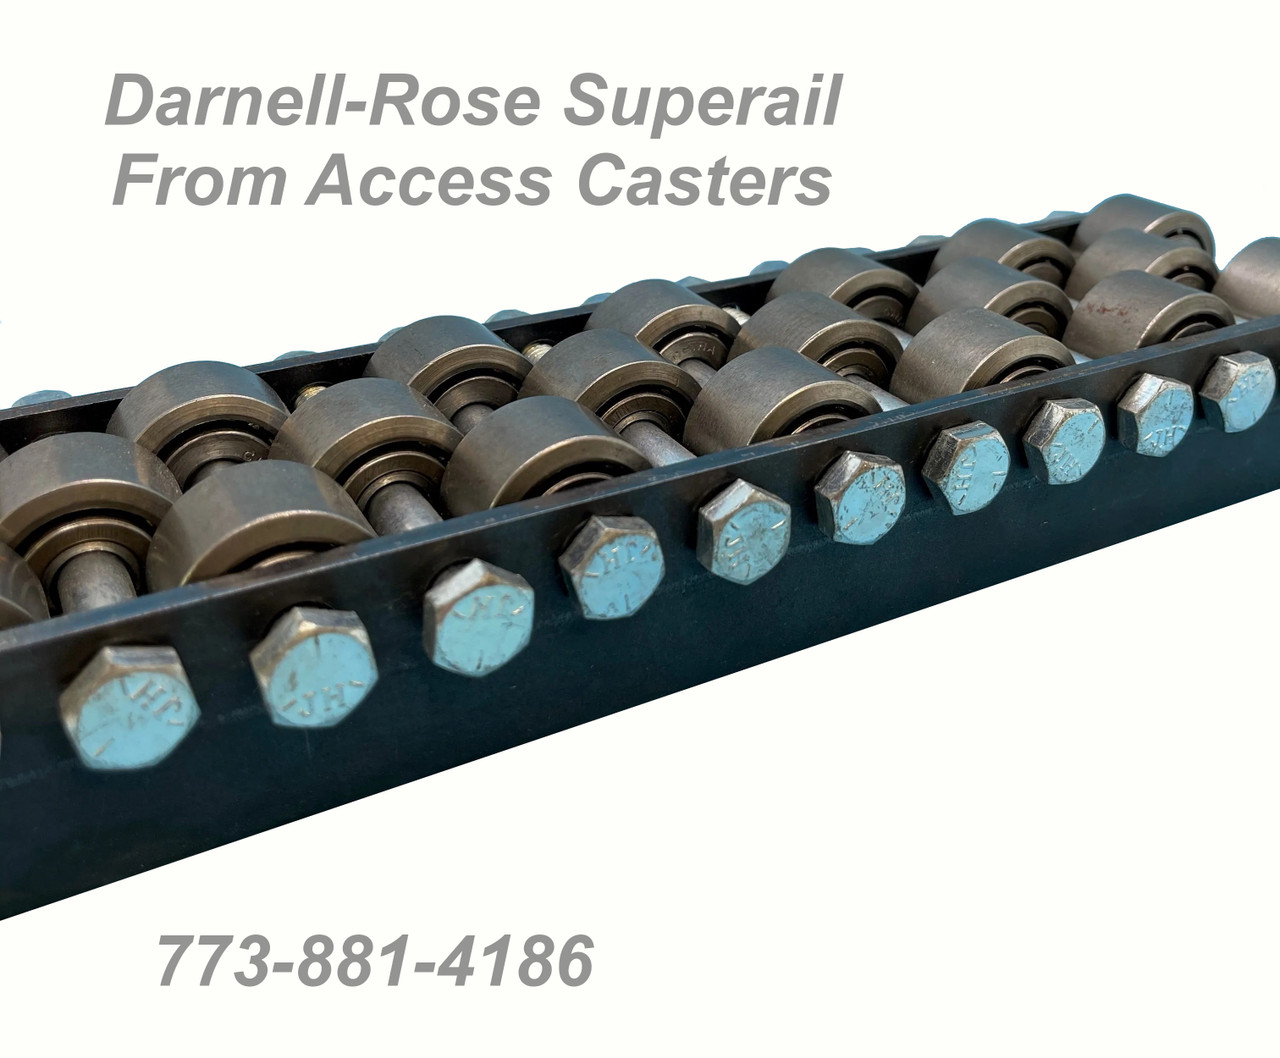 Darnell-Rose Superail